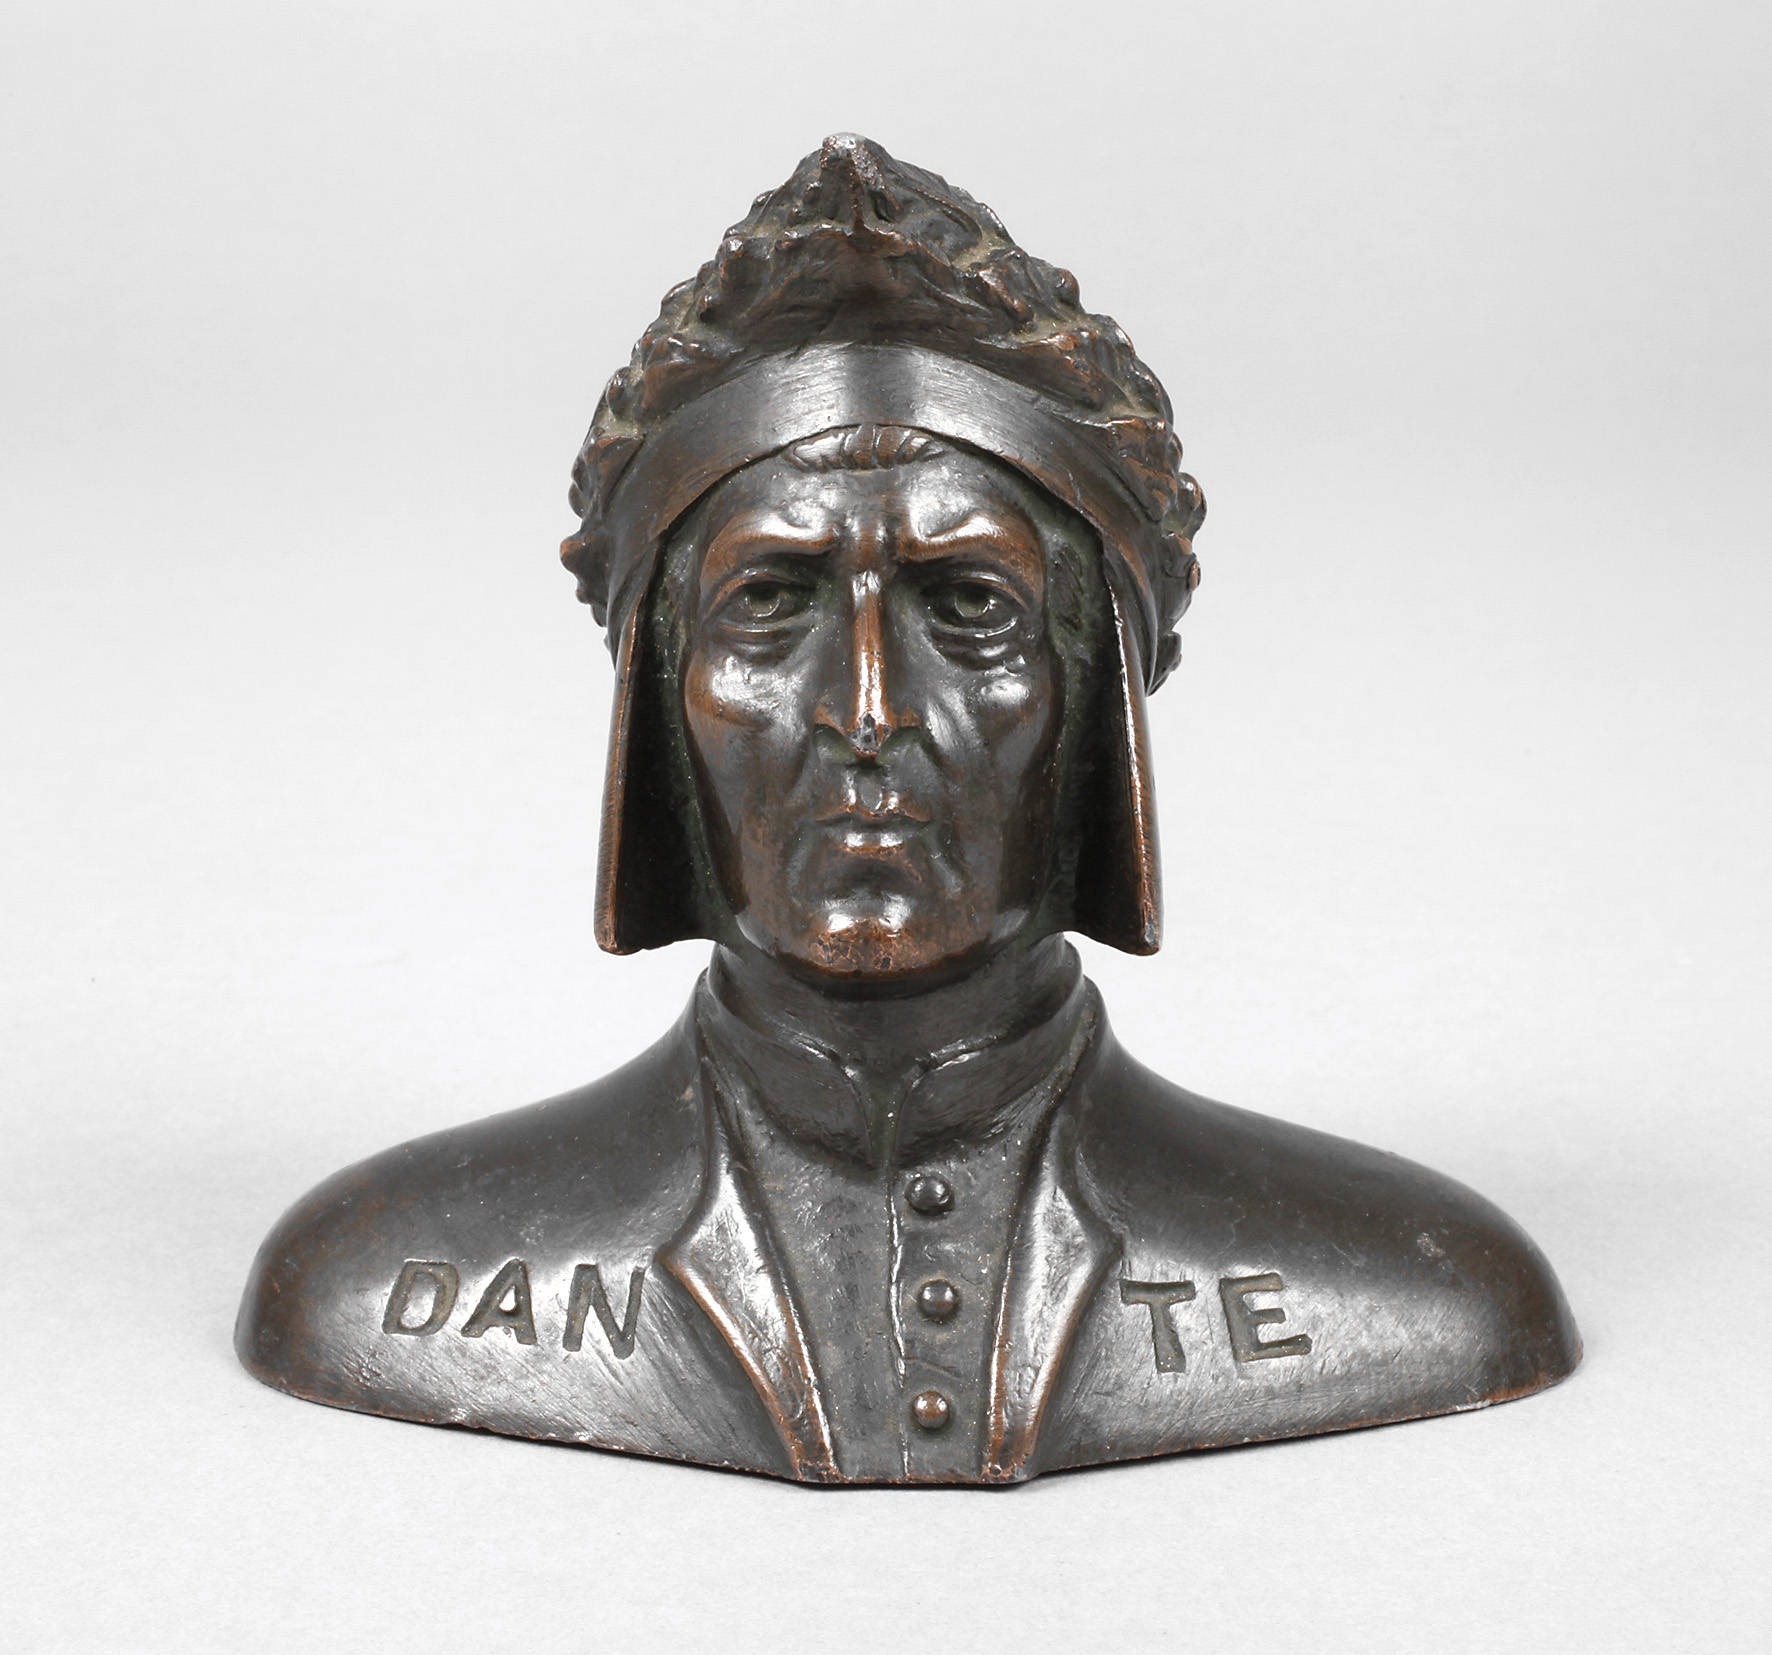 Miniaturbüste des Dante Alighieri